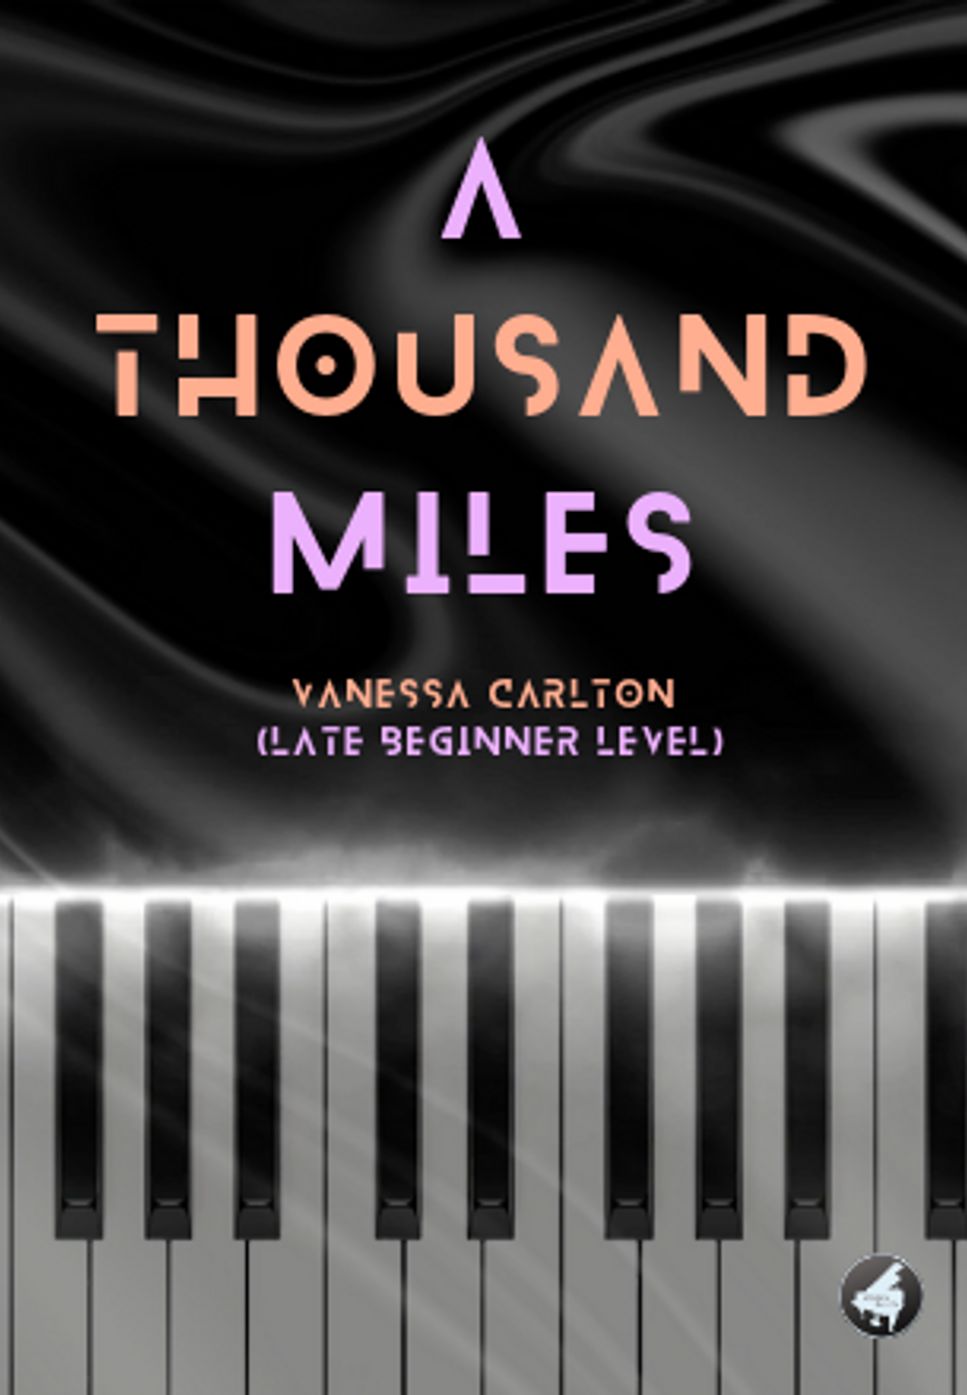 Vanessa Carlton - A Thousand Miles (Late Beginner Level) by Aldora Davita